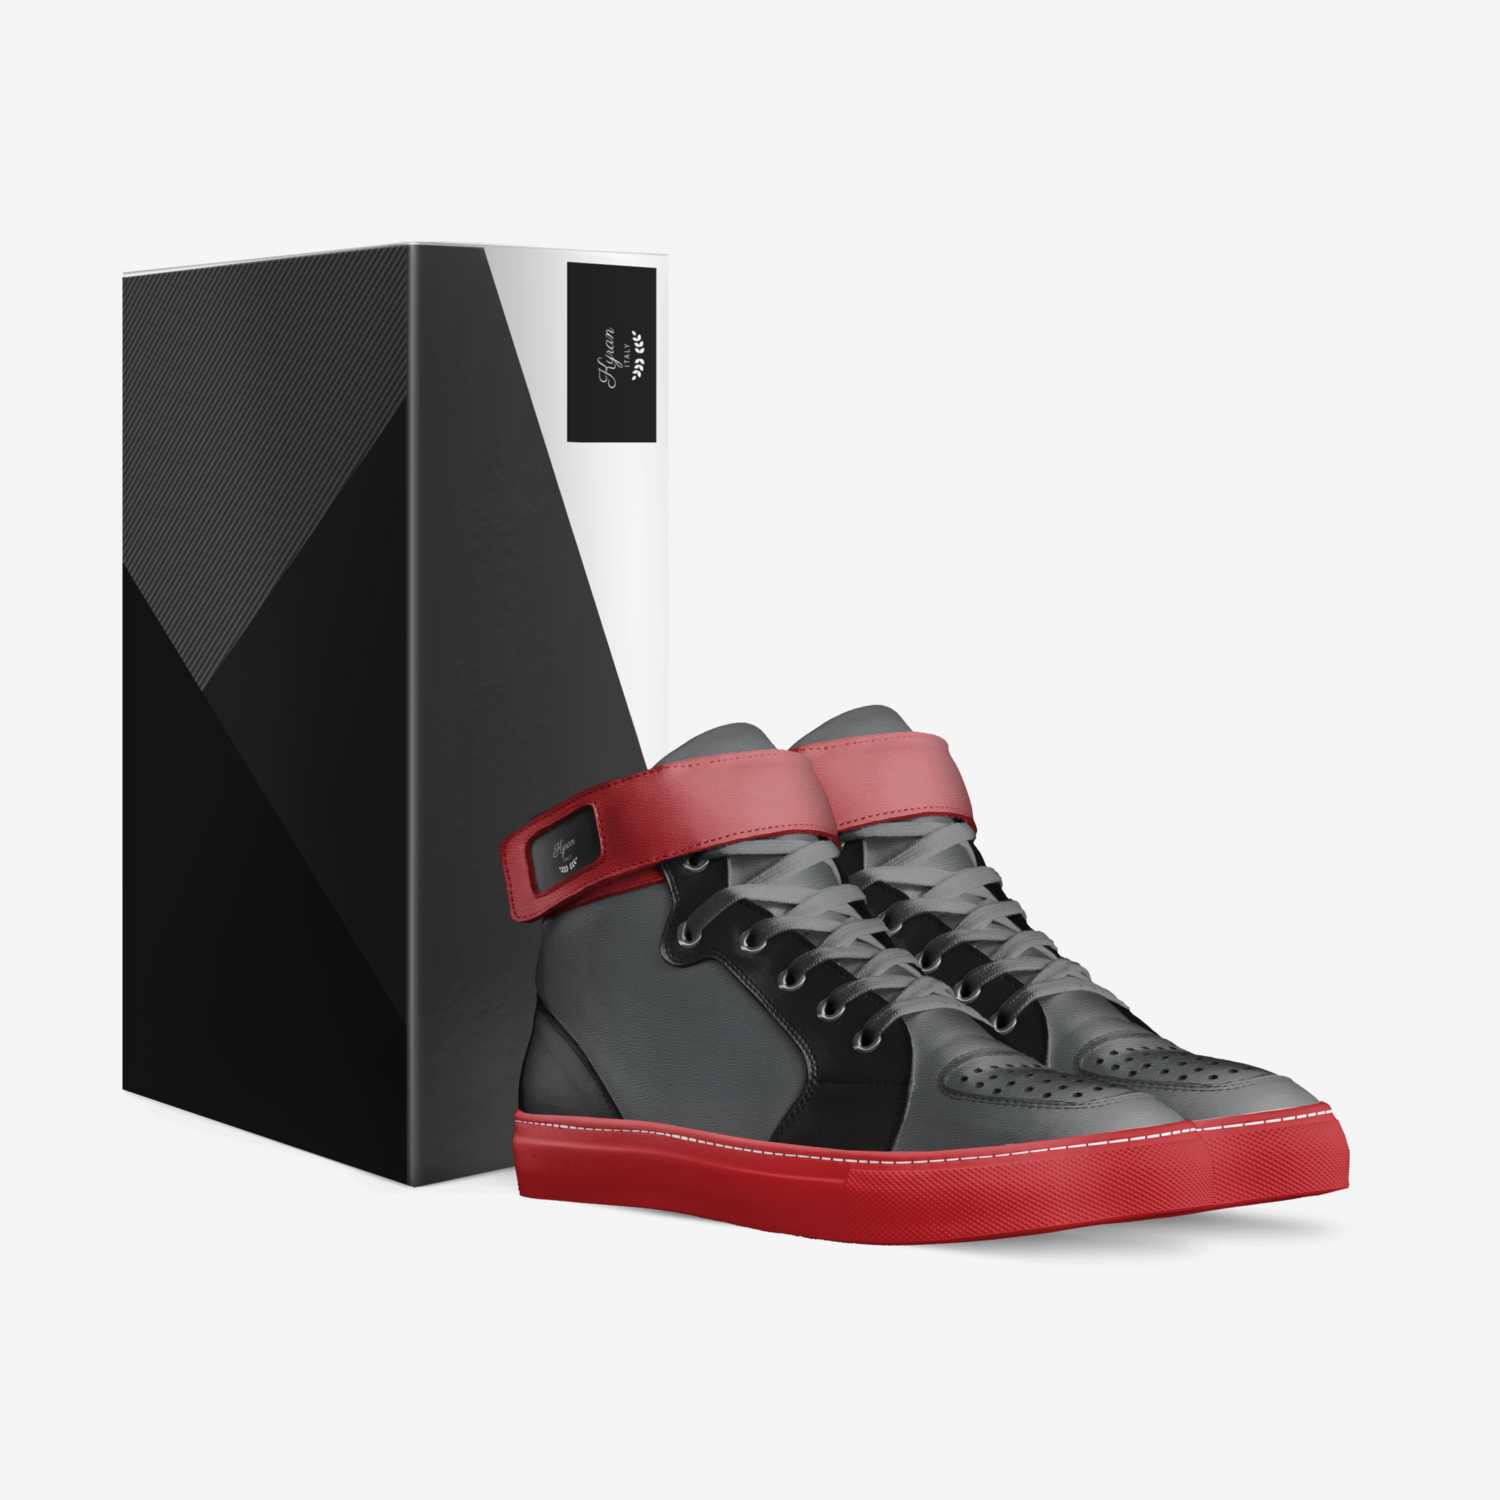 Kyran  custom made in Italy shoes by Tiara Vasquez | Box view